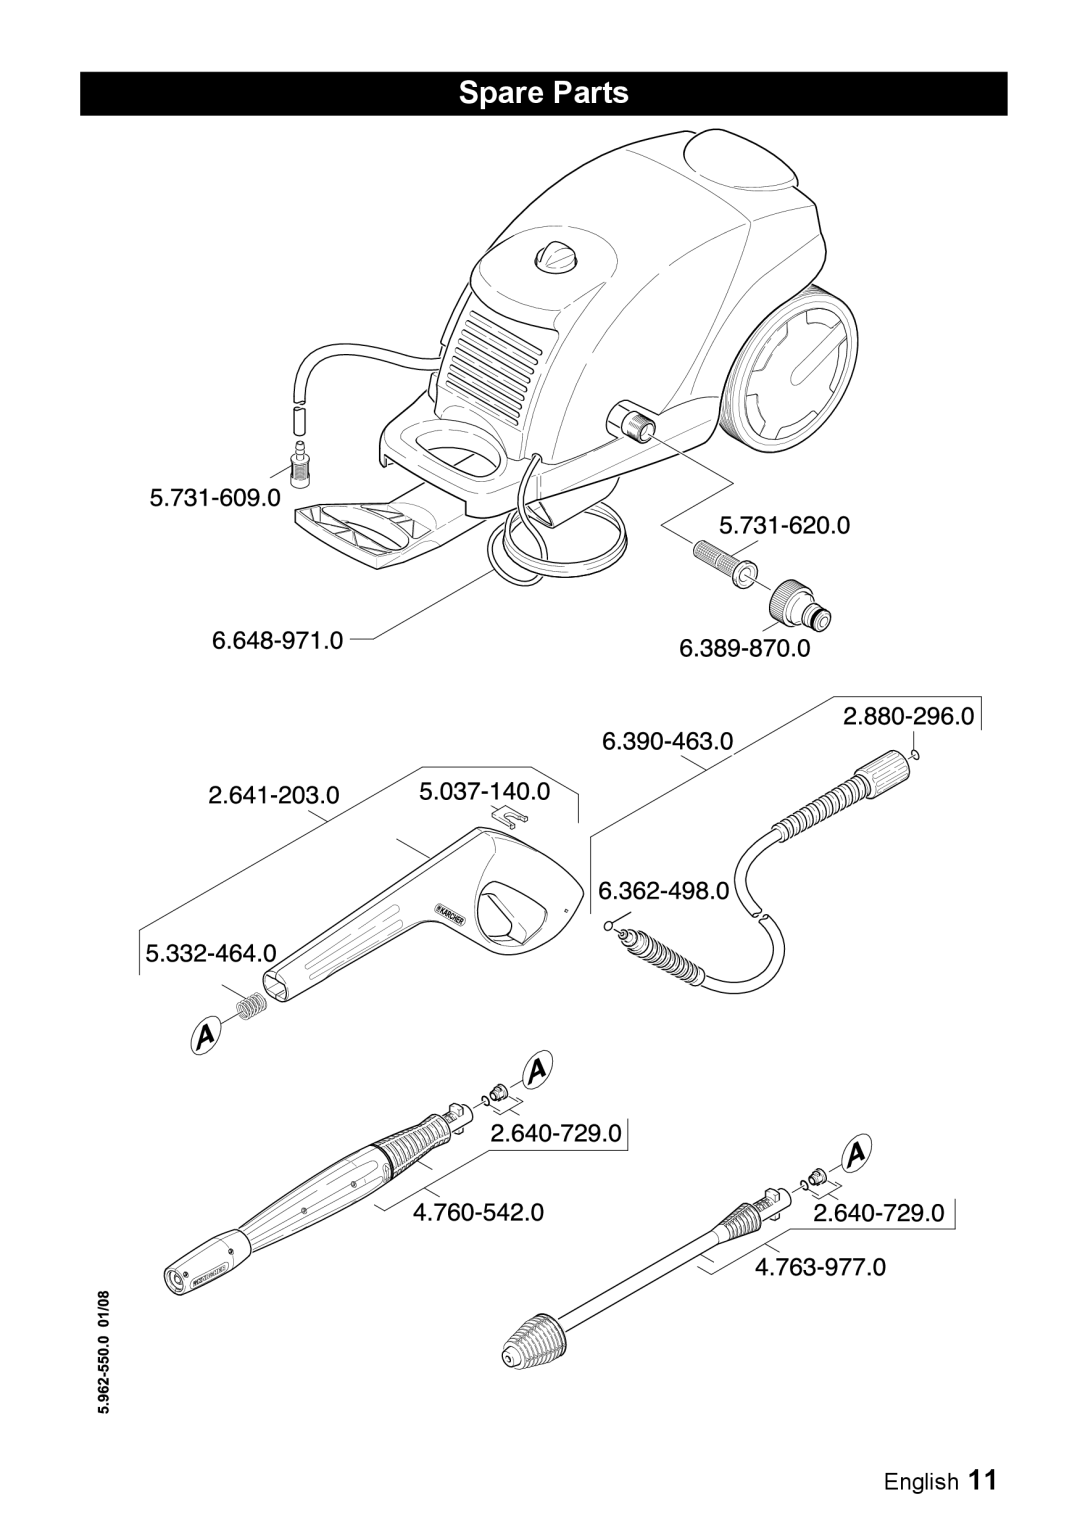 Karcher K 5.20 M manual Spare Parts, English 